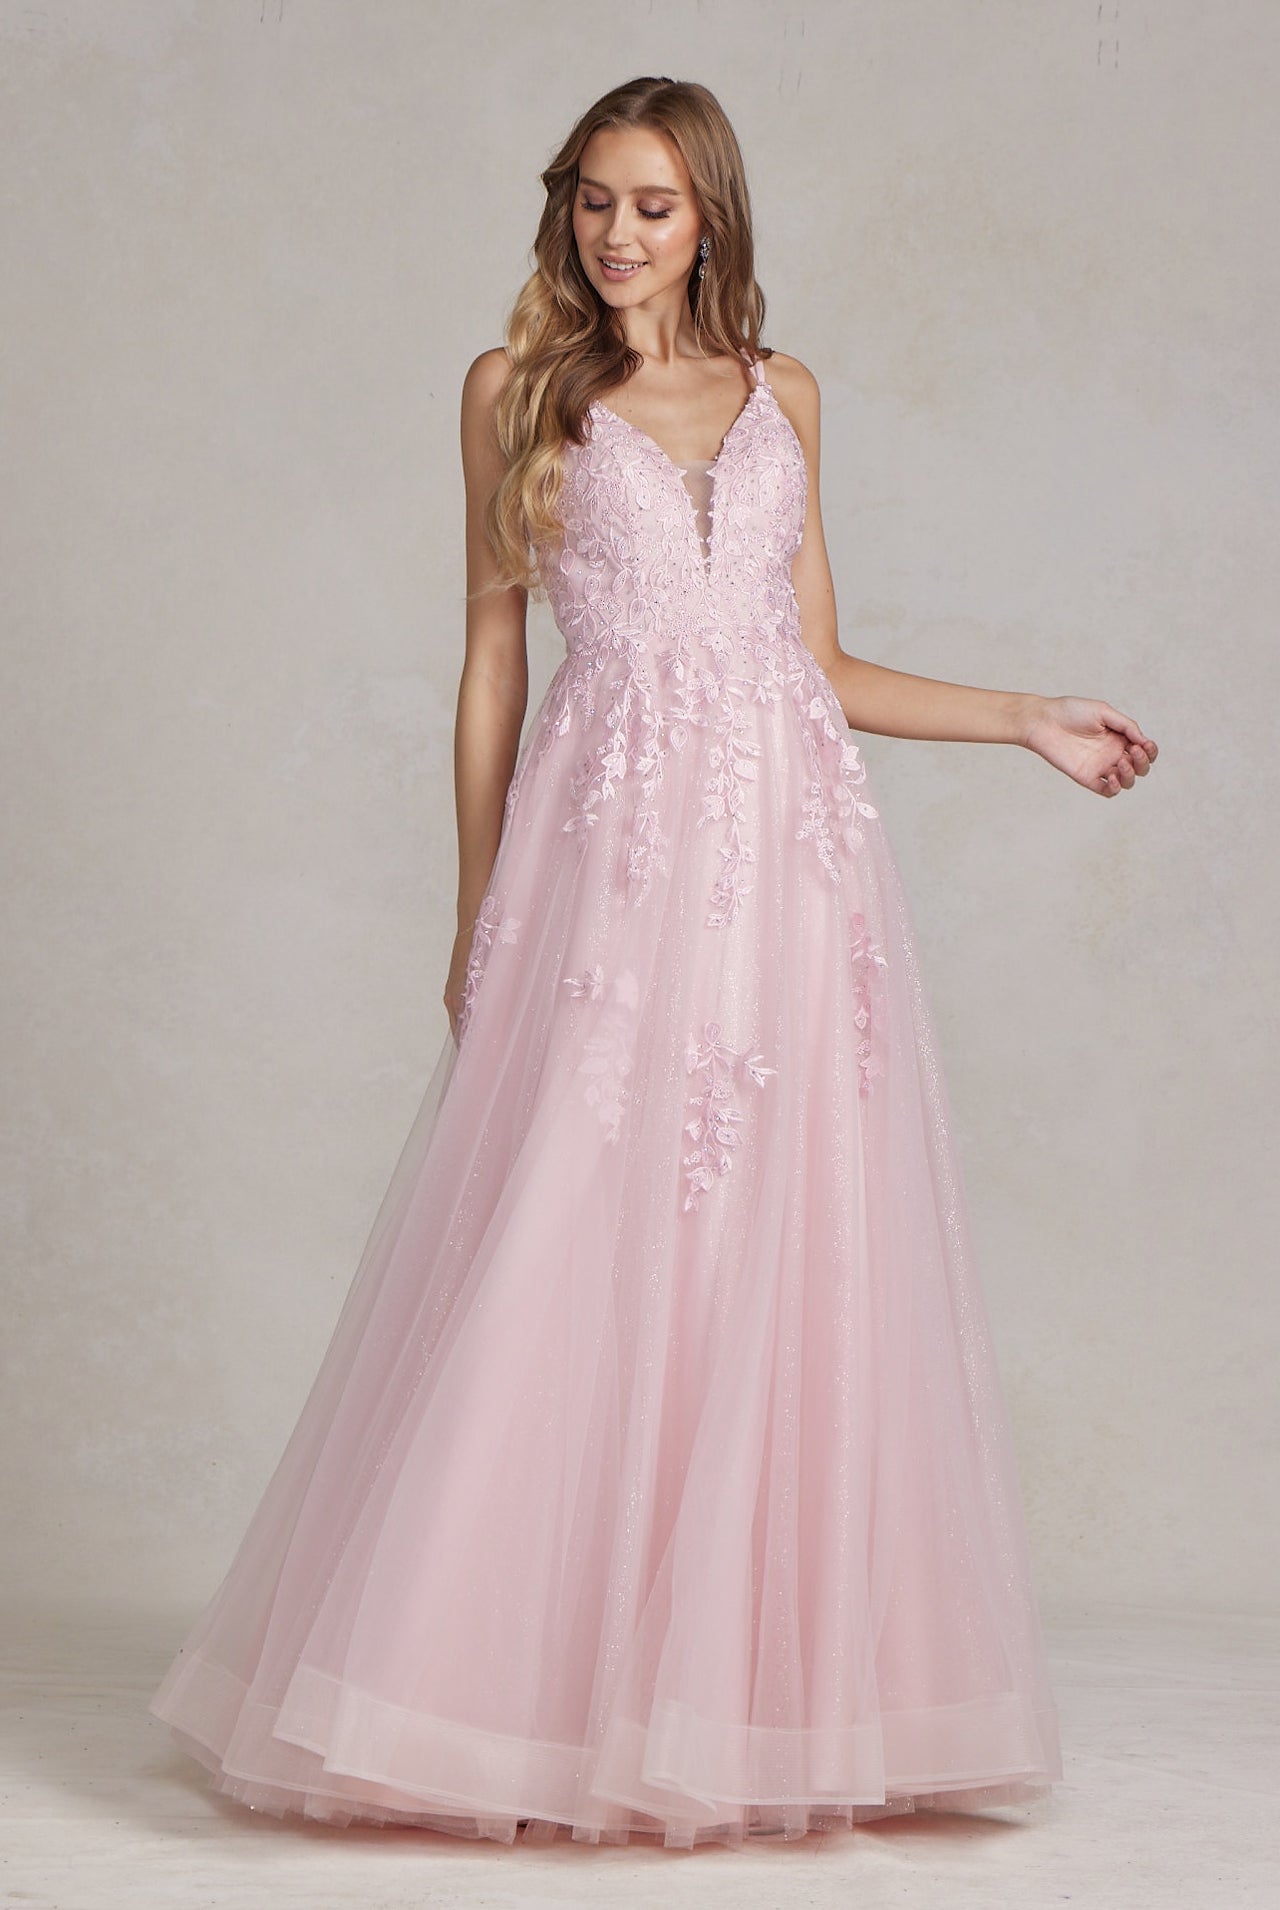 Illusion V-Neck Embroidered Lace Straps Open Back Long Prom Dress NXT1136-Prom Dress-smcfashion.com